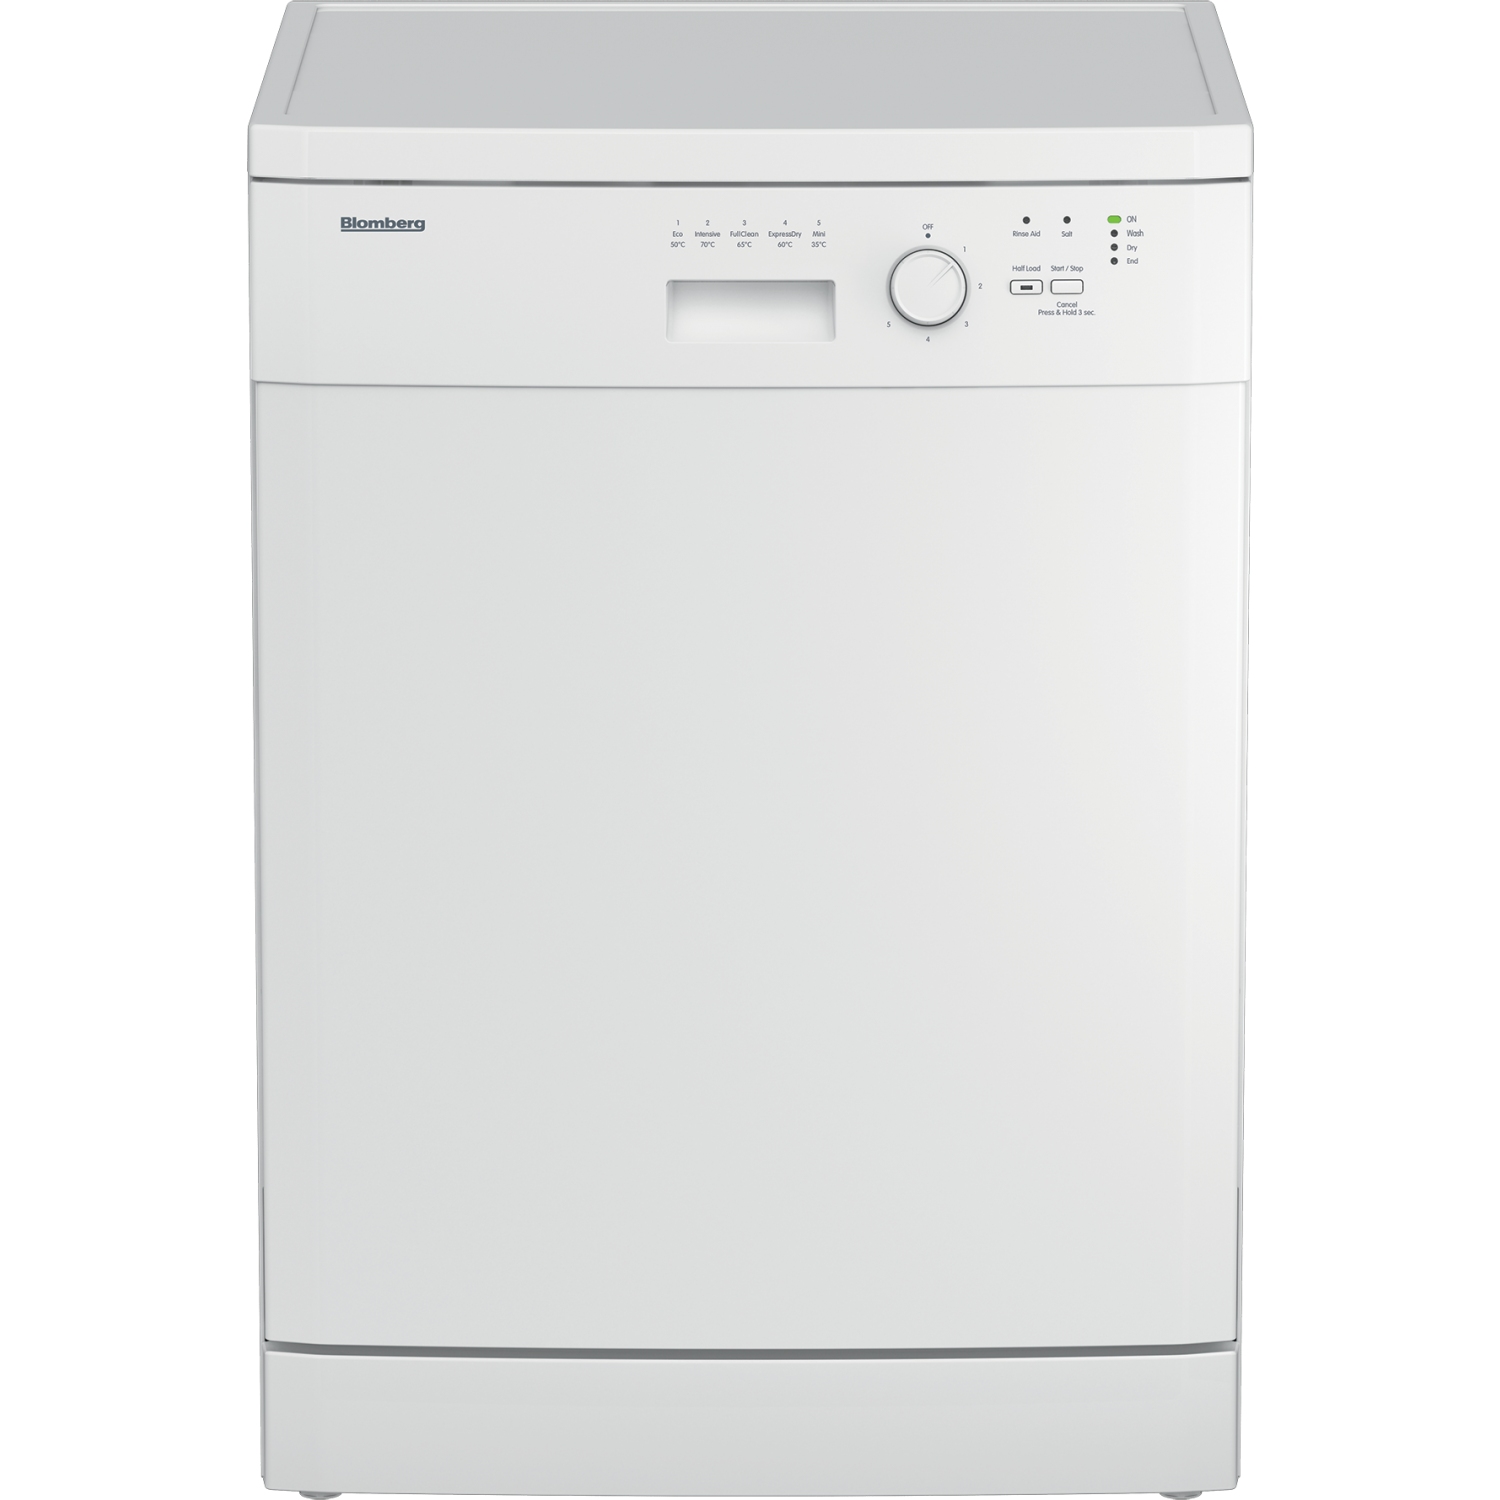 Blomberg LDF30211W Full Size Freestanding Dishwasher - White - 13 Place Settings - 5